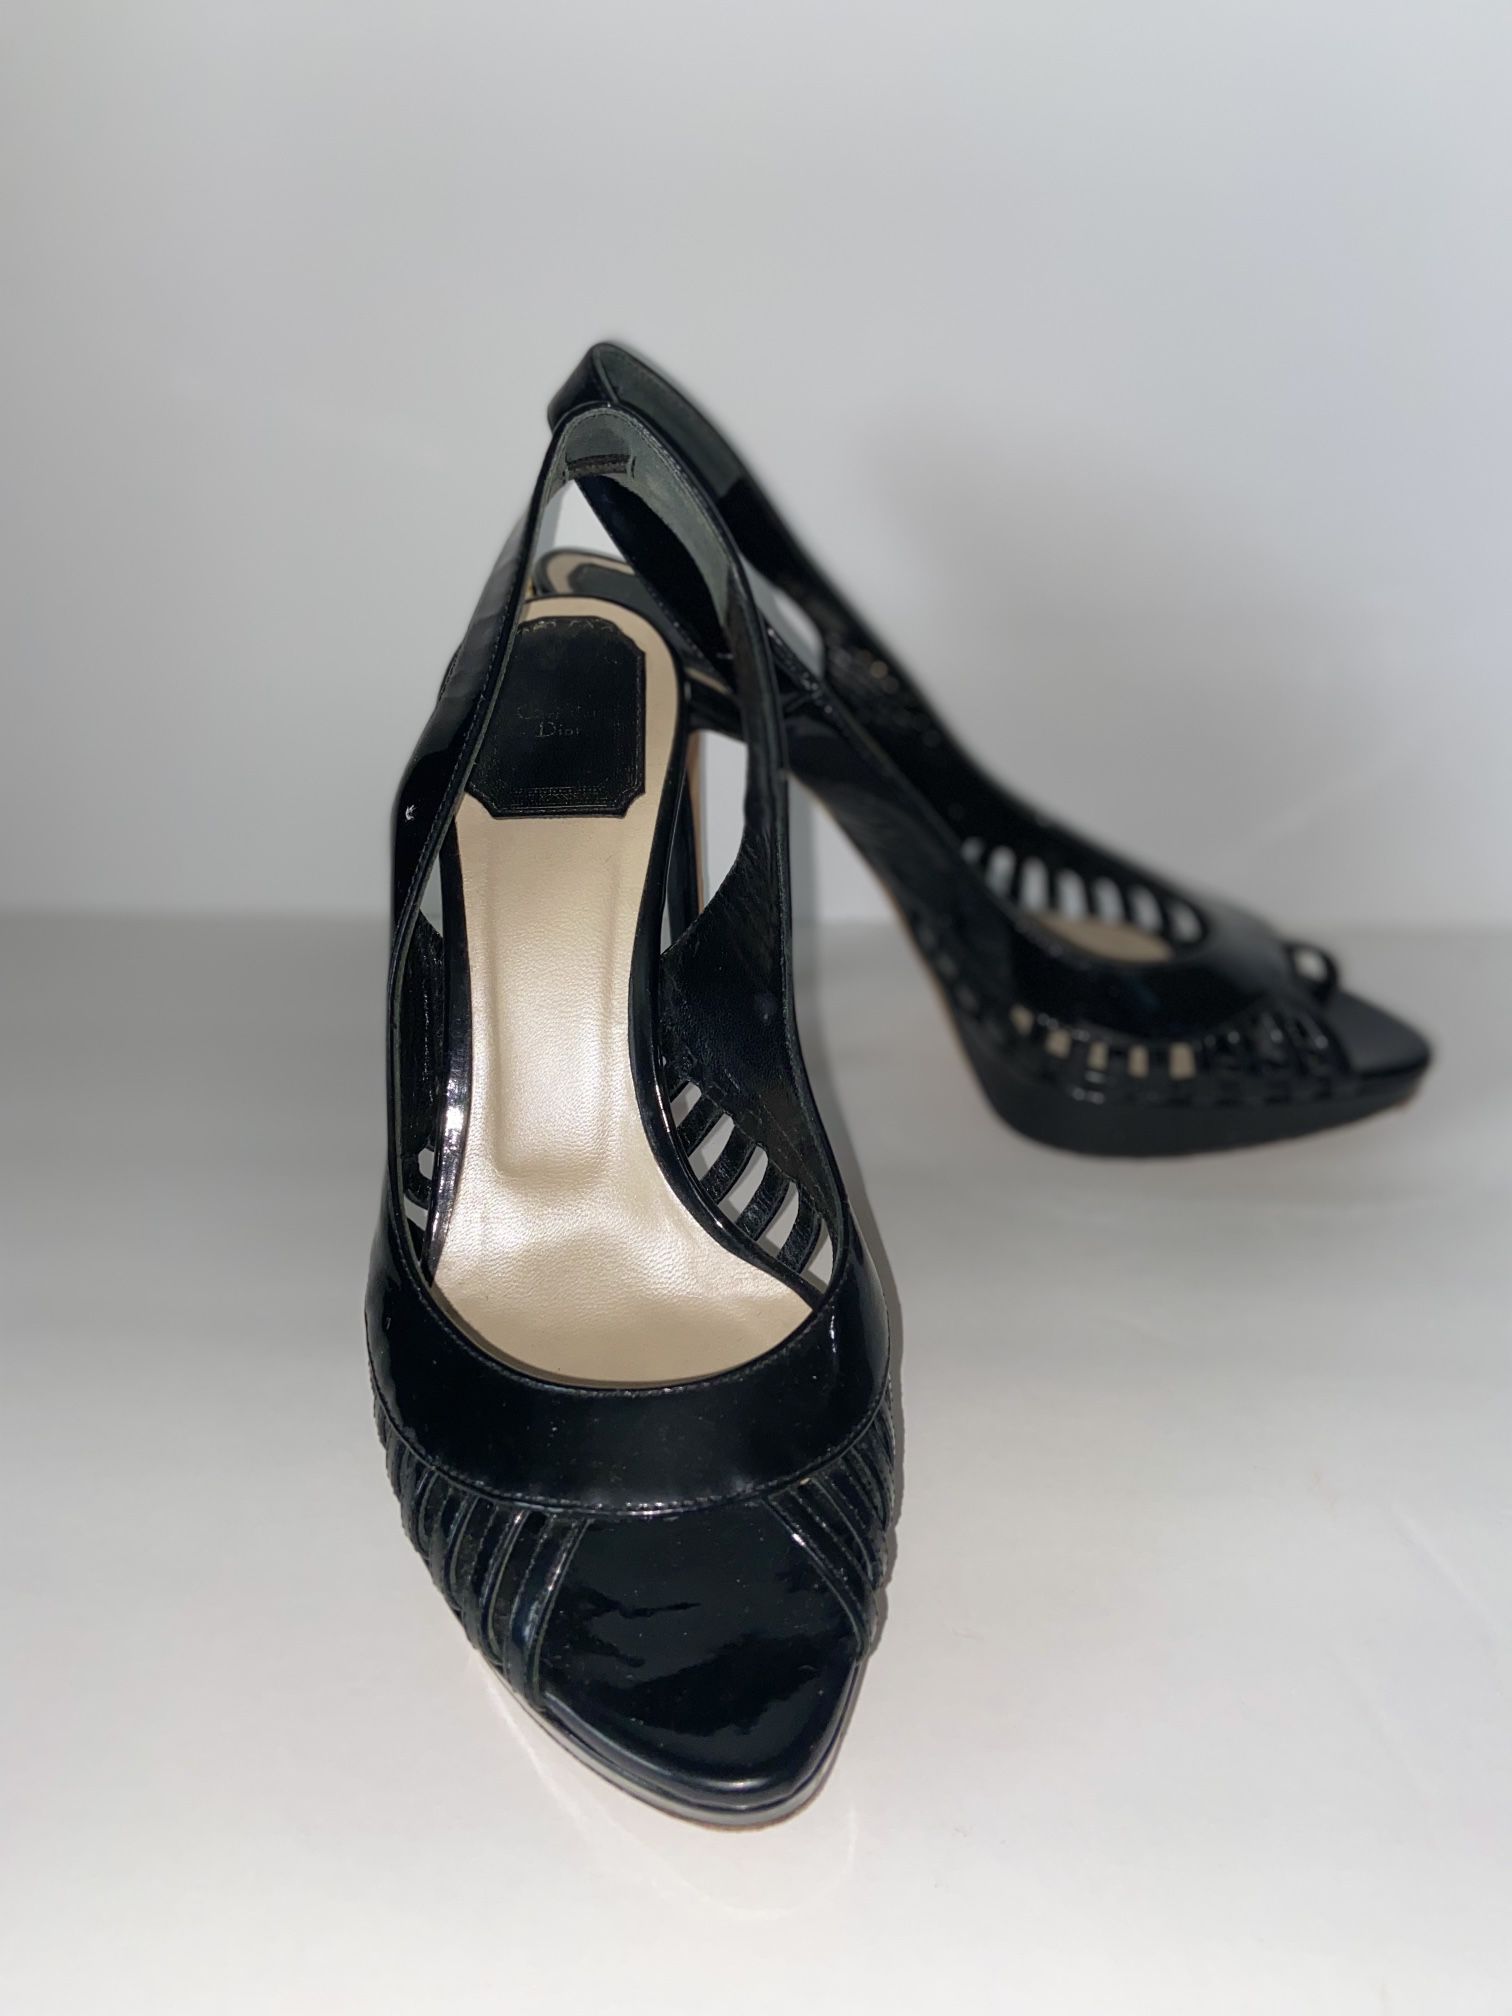 Christian Dior Heels Black Peep Toes Size 37 US 6.5